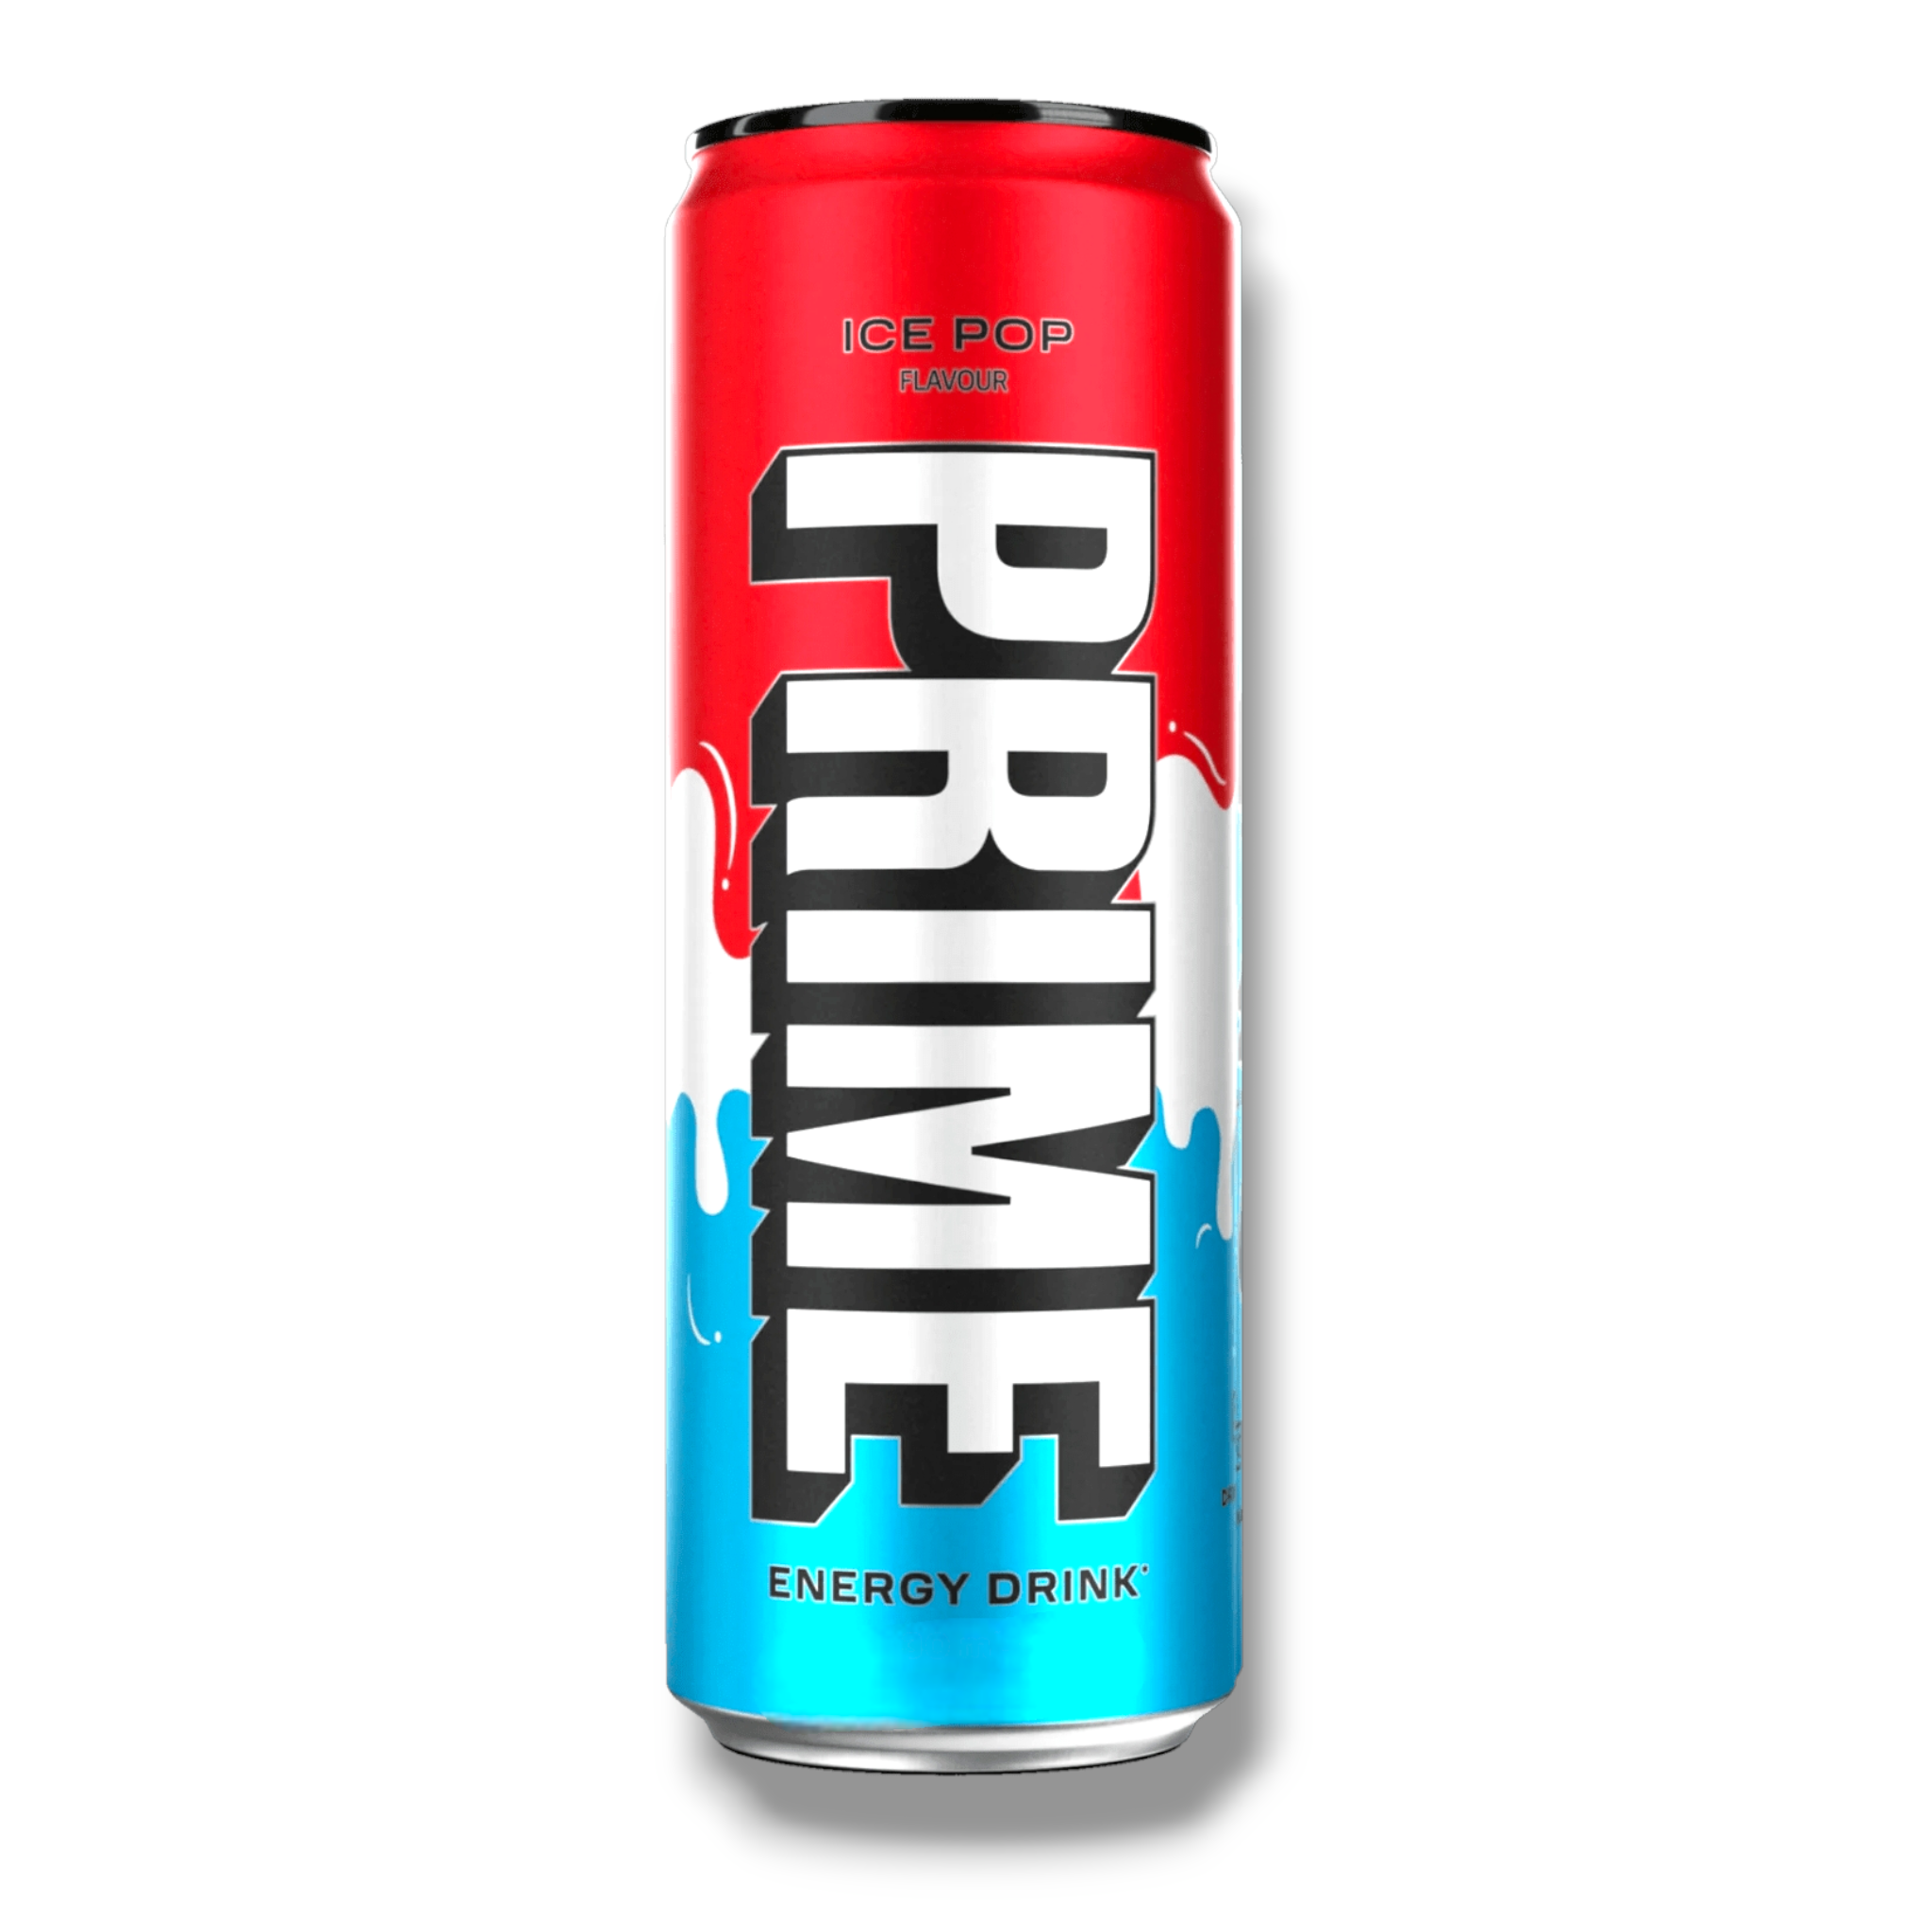 Prime Hydration Drink - Ice Pop 330ml Dose- Sportdrink von Logan Paul & KSI/ 140mg Koffein